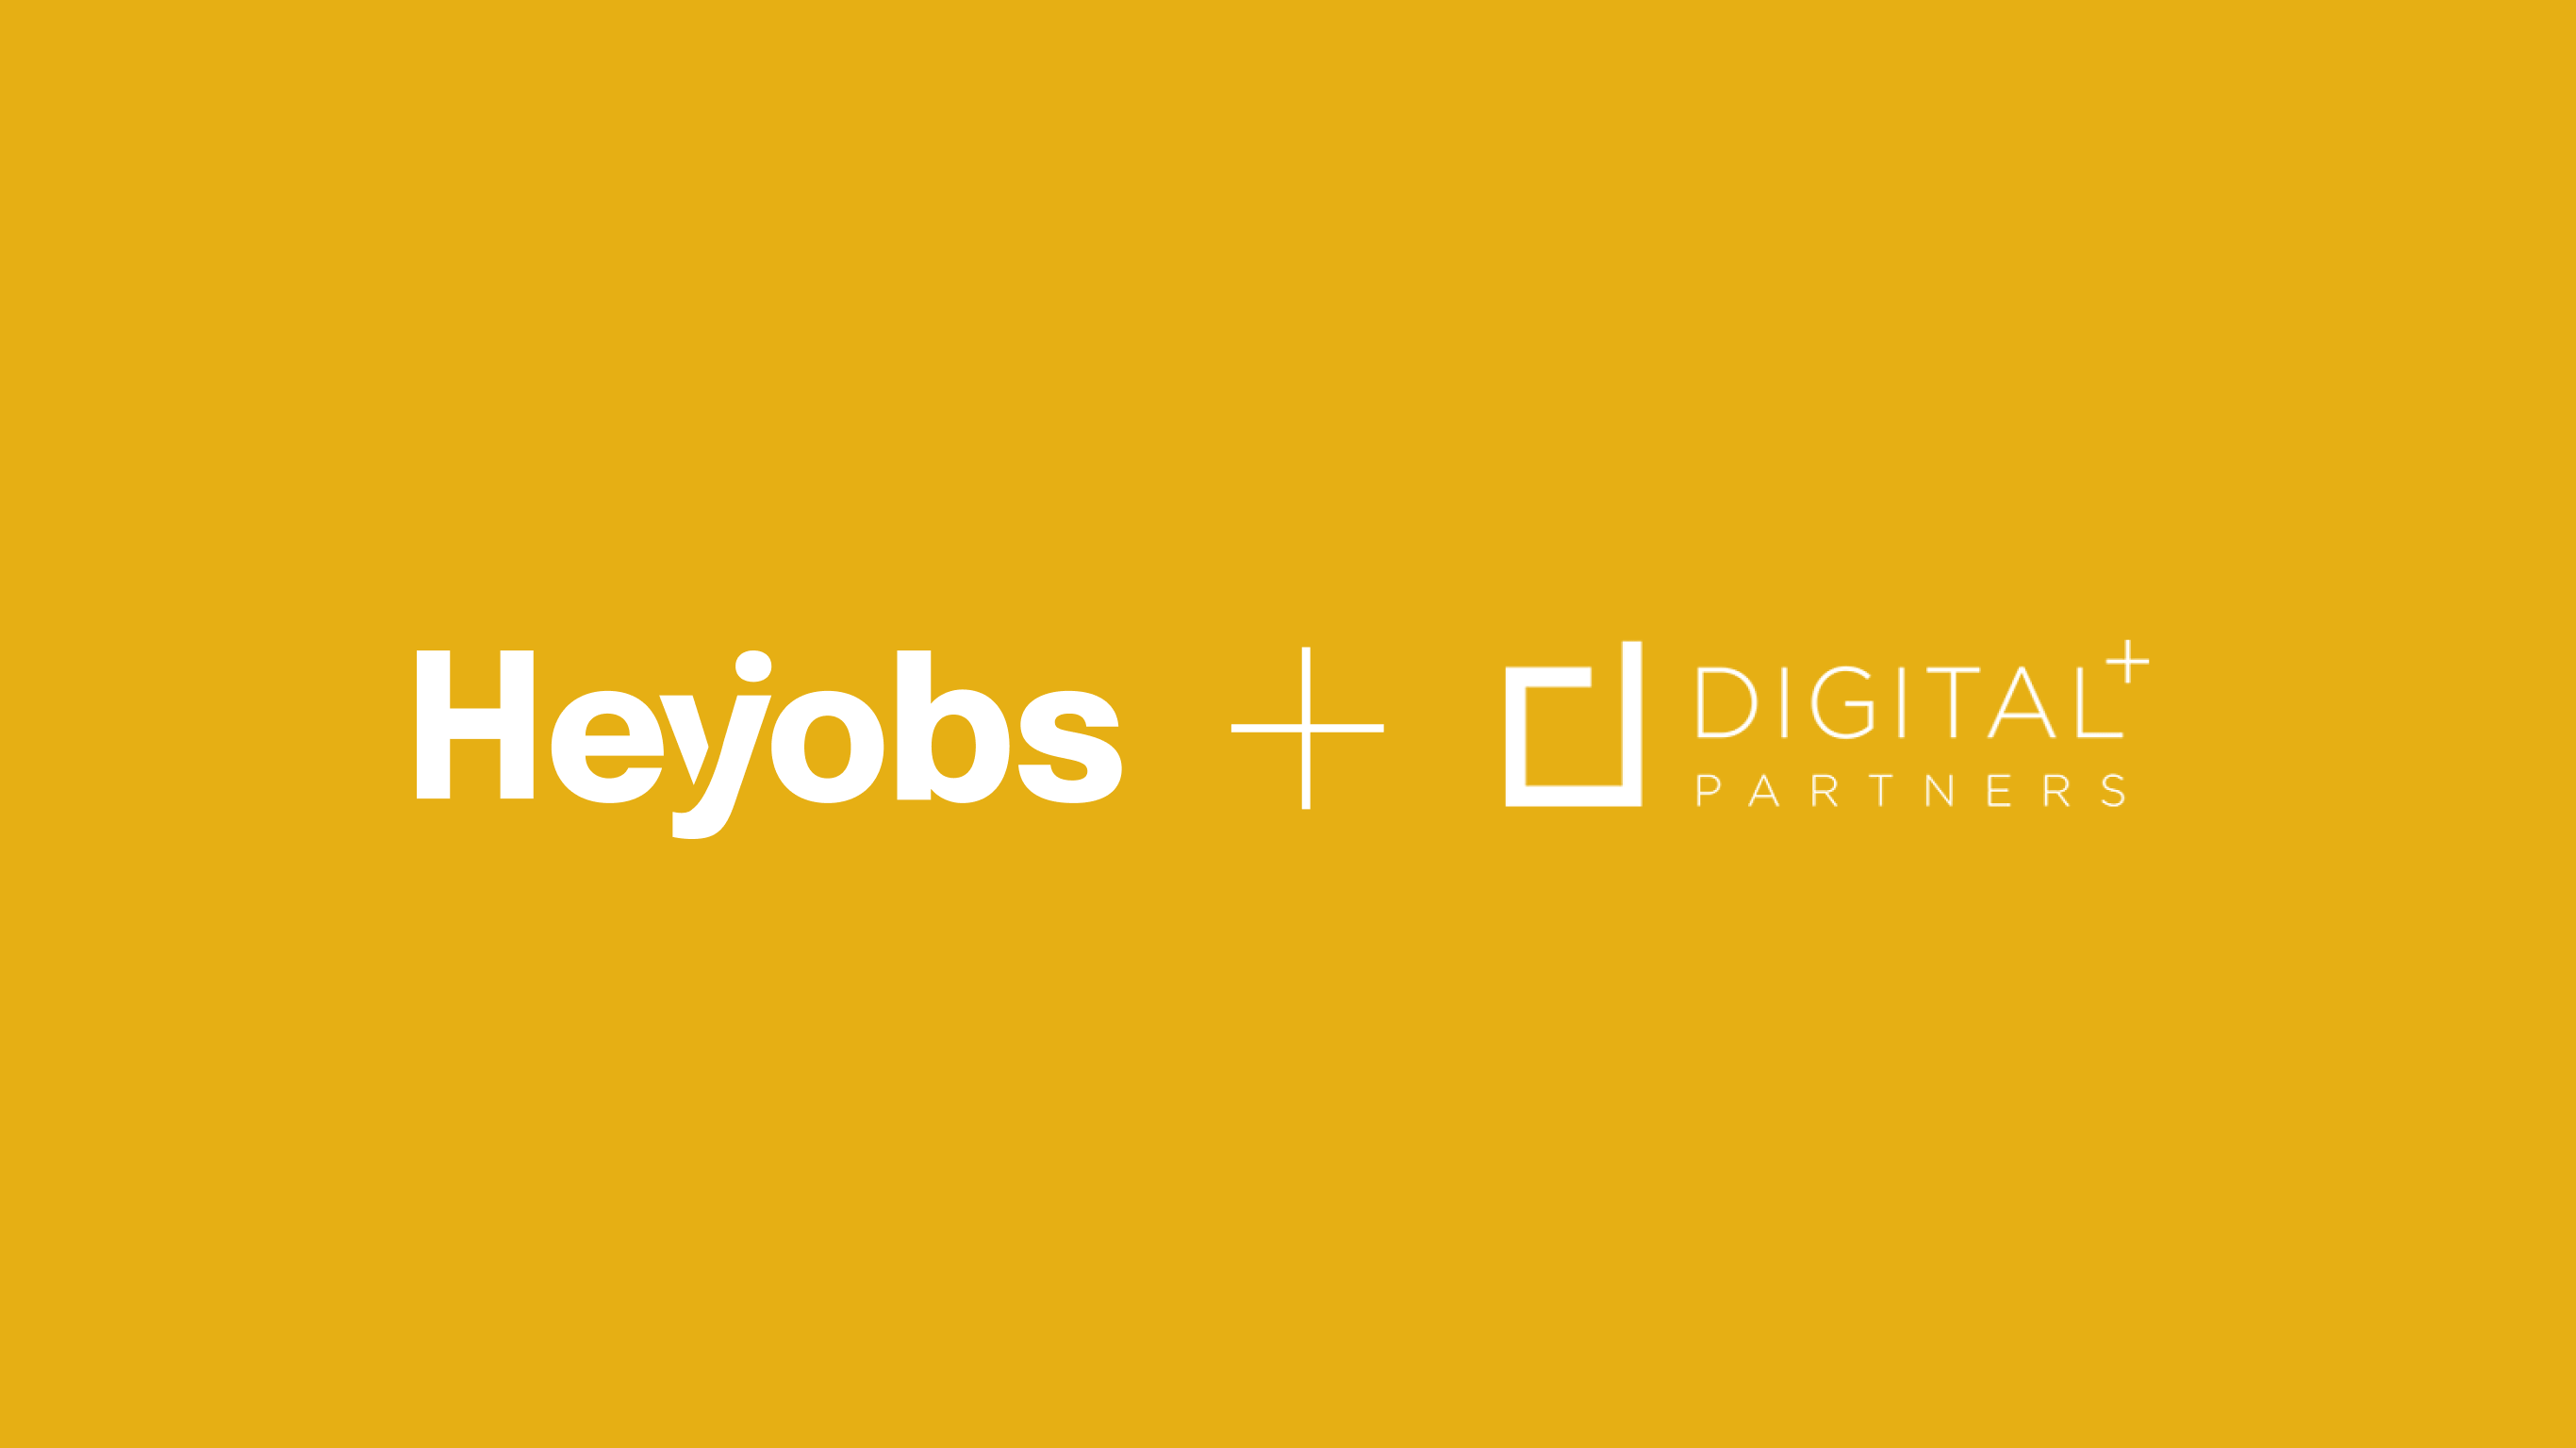 Tech & Product DD | Growth | Code & Co. advises Digital+ Partners on HeyJobs